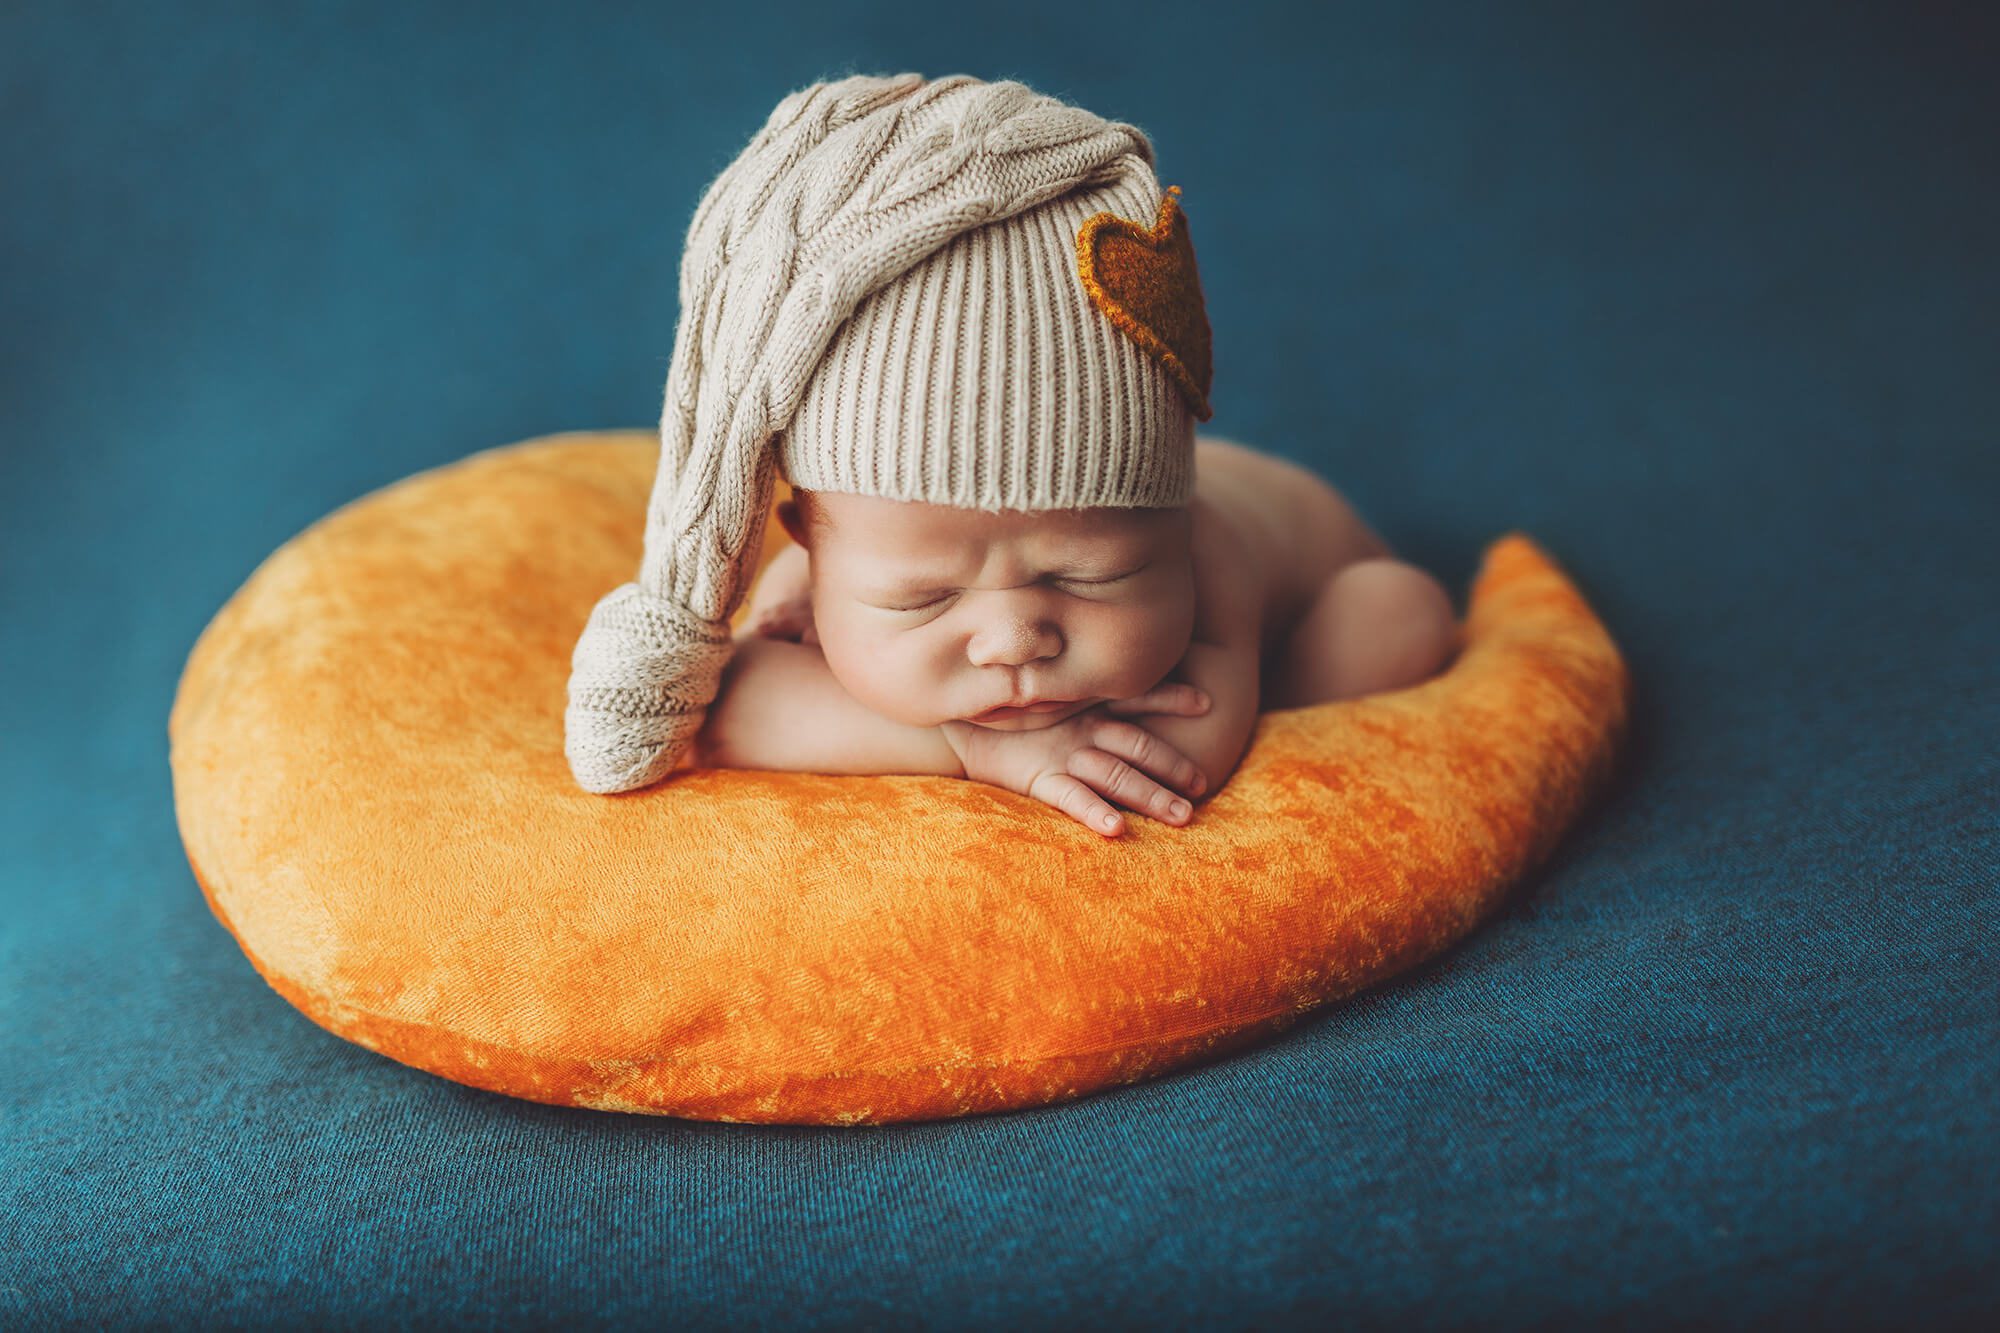 Baby and moon prop by Wiesbaden newborn photographer